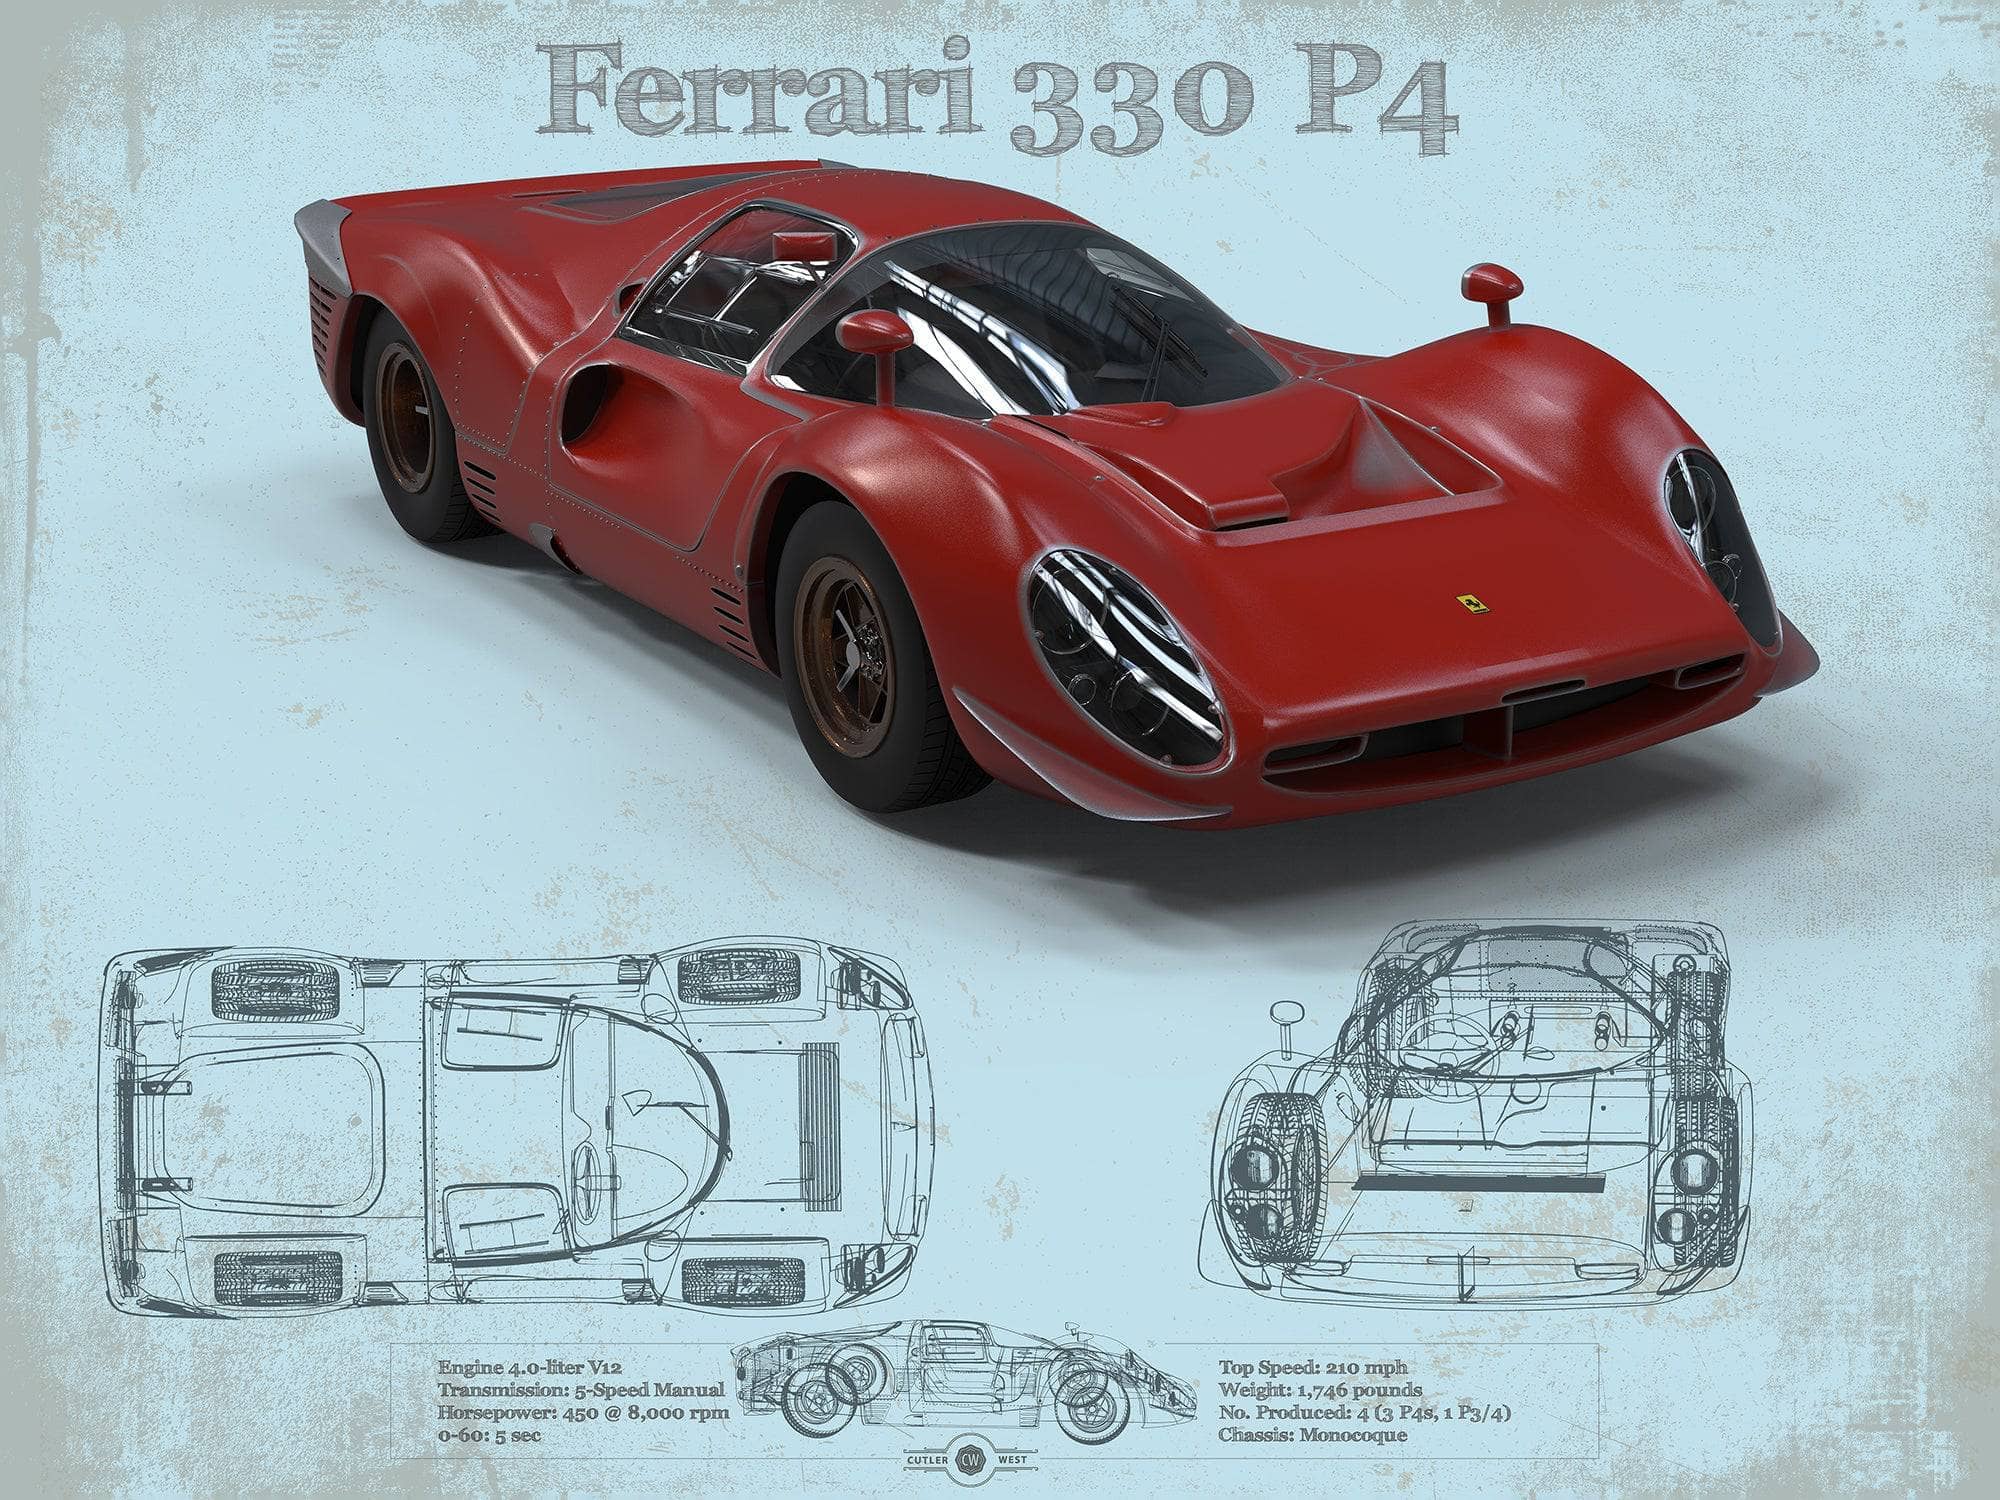 Cutler West Ferrari Collection 14" x 11" / Unframed Ferrari 330 P4 Vintage Sports Car Print 845000143_61739